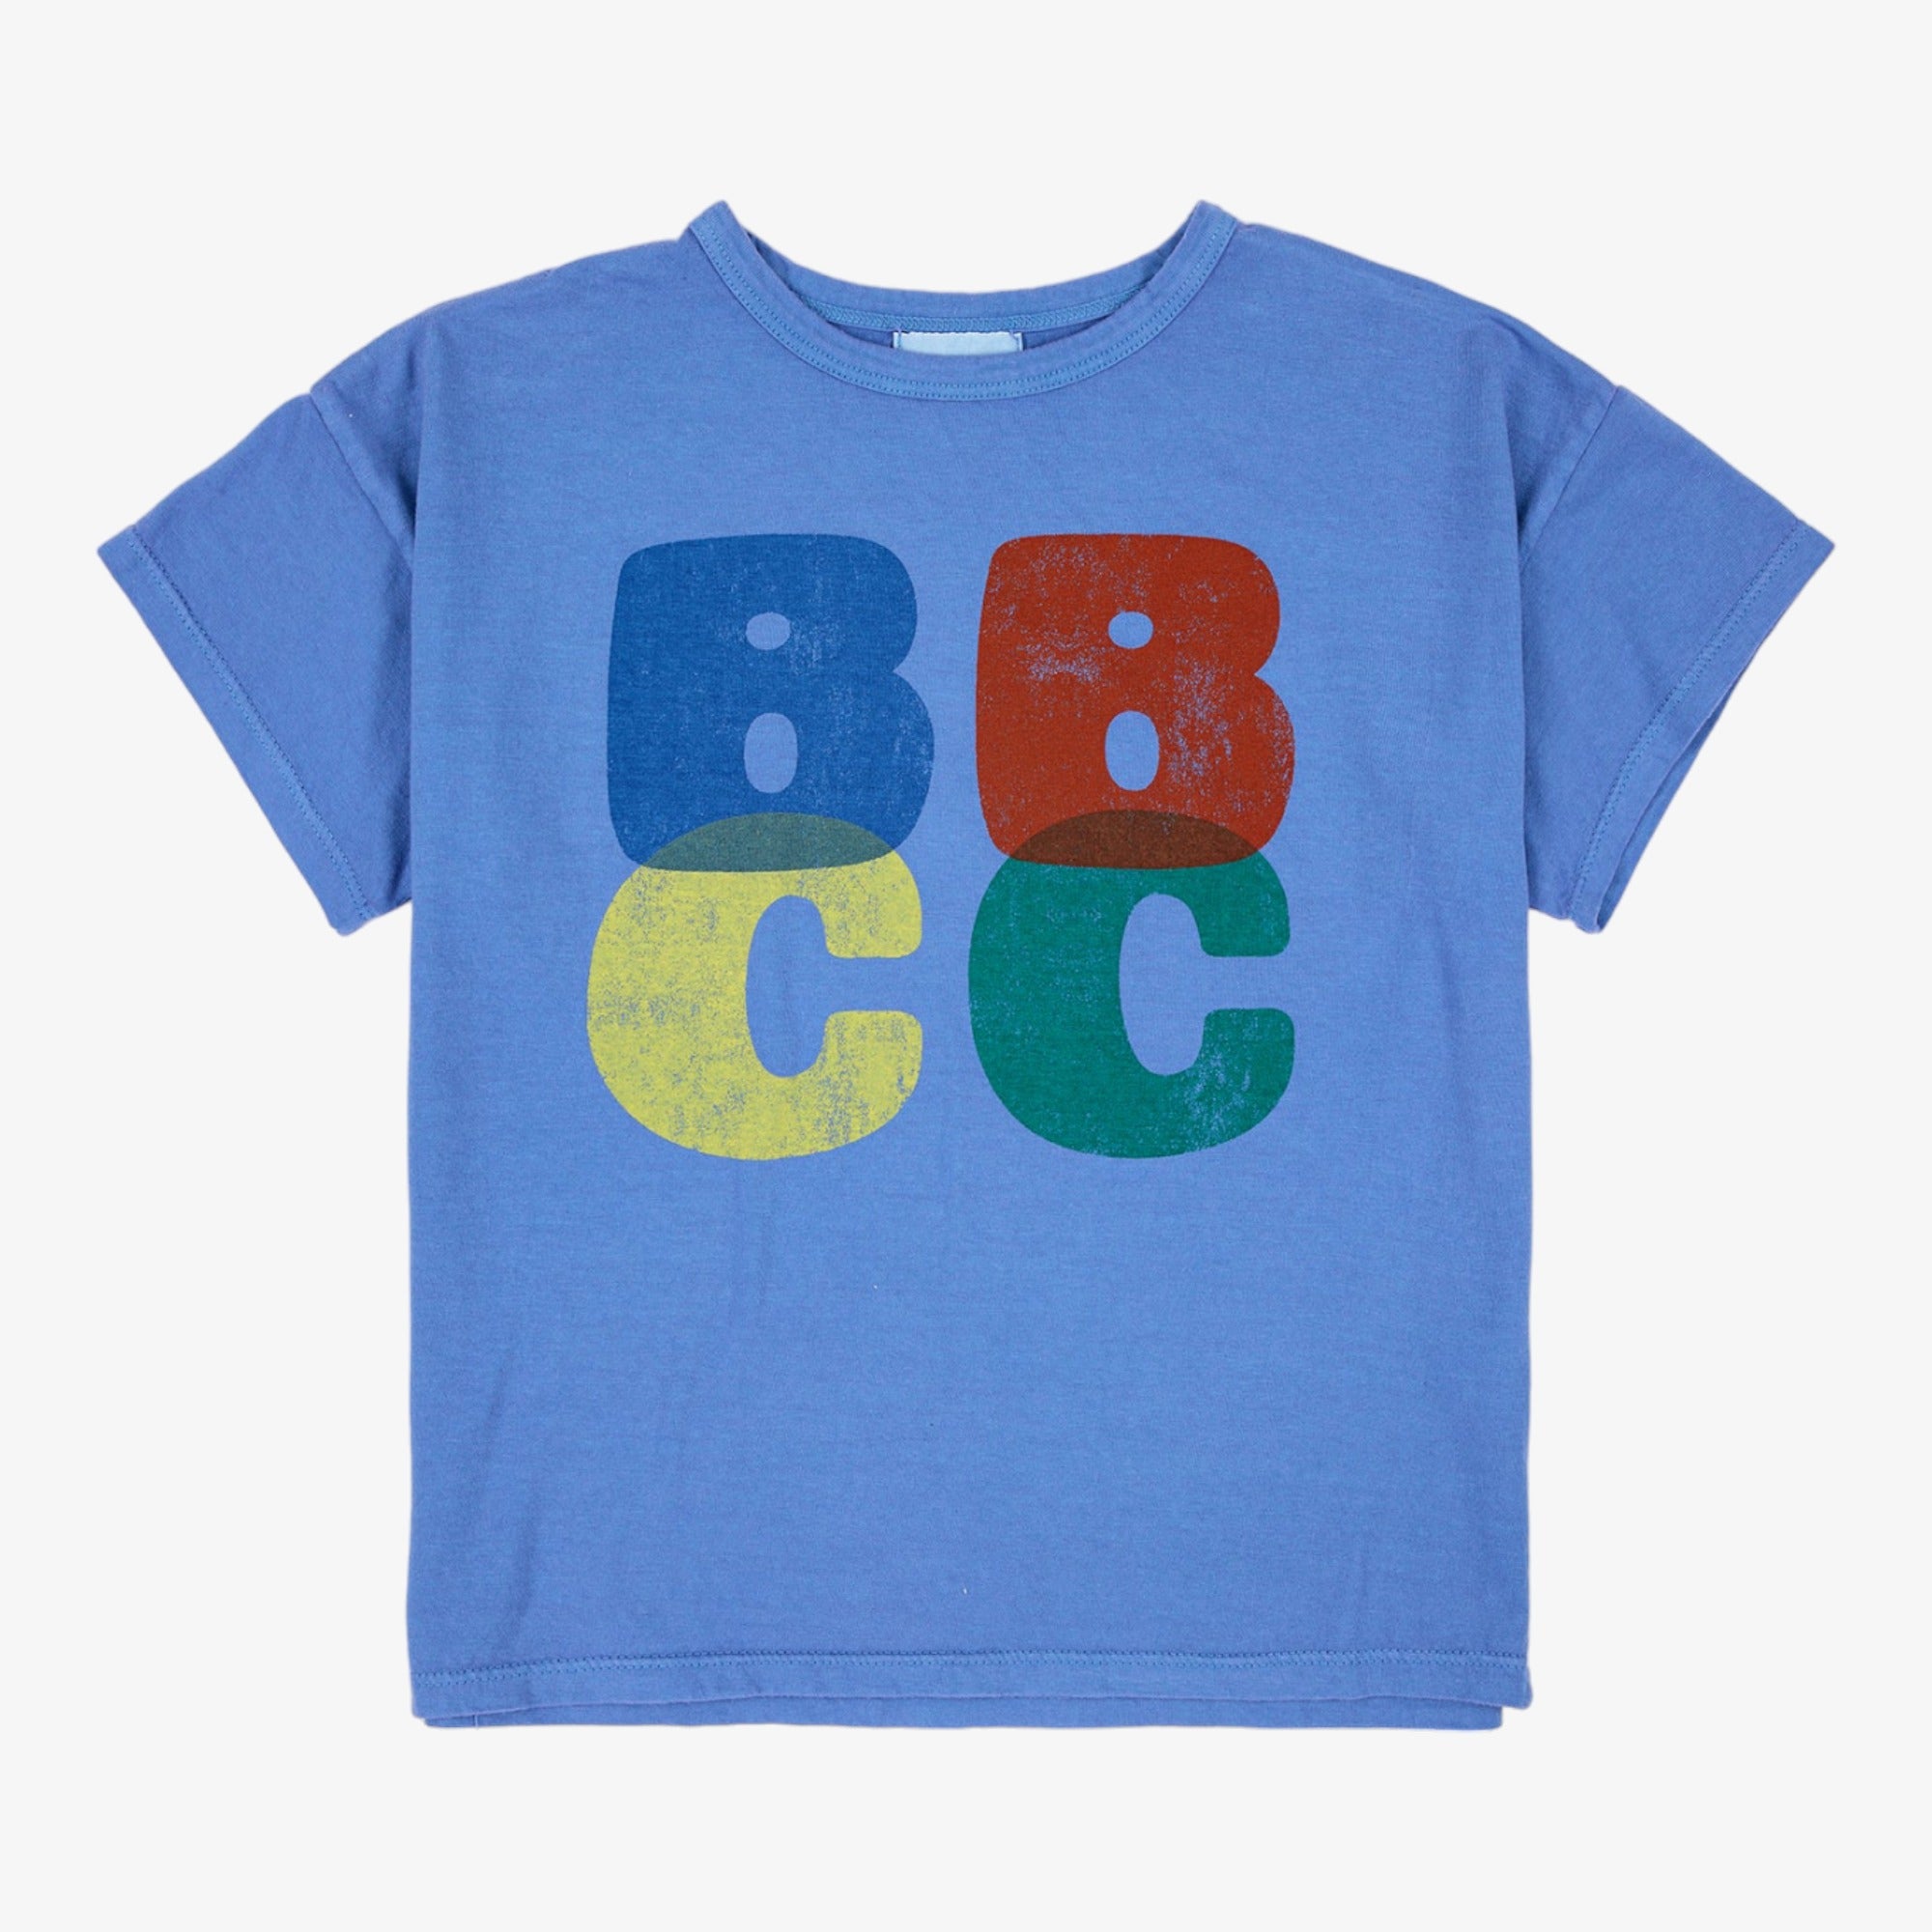 Bobo Choses Color Block Shirt - Blue